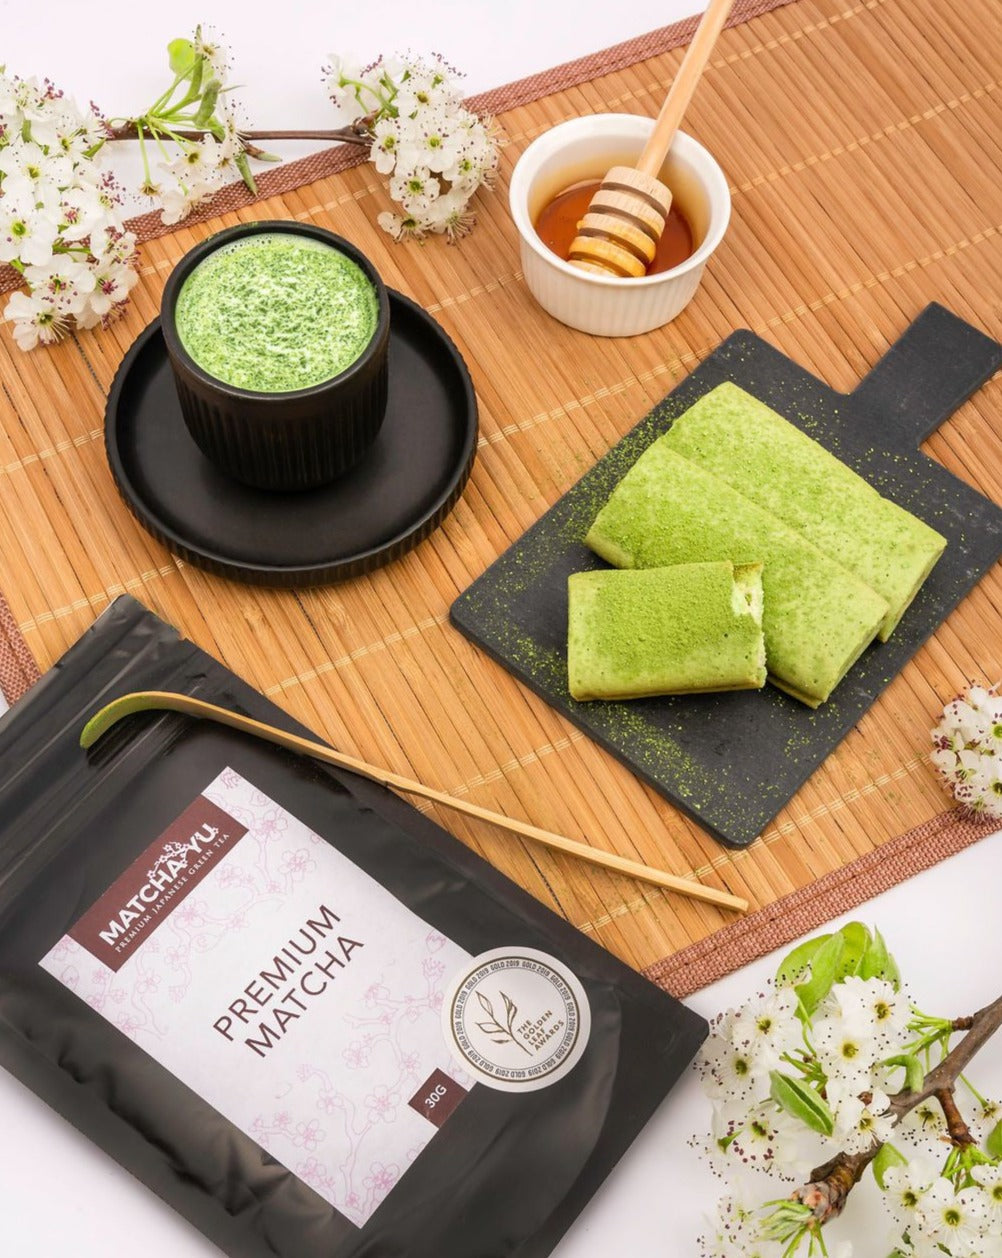 JING Tea Matcha Shaker - Product Review - Tea for Me Please